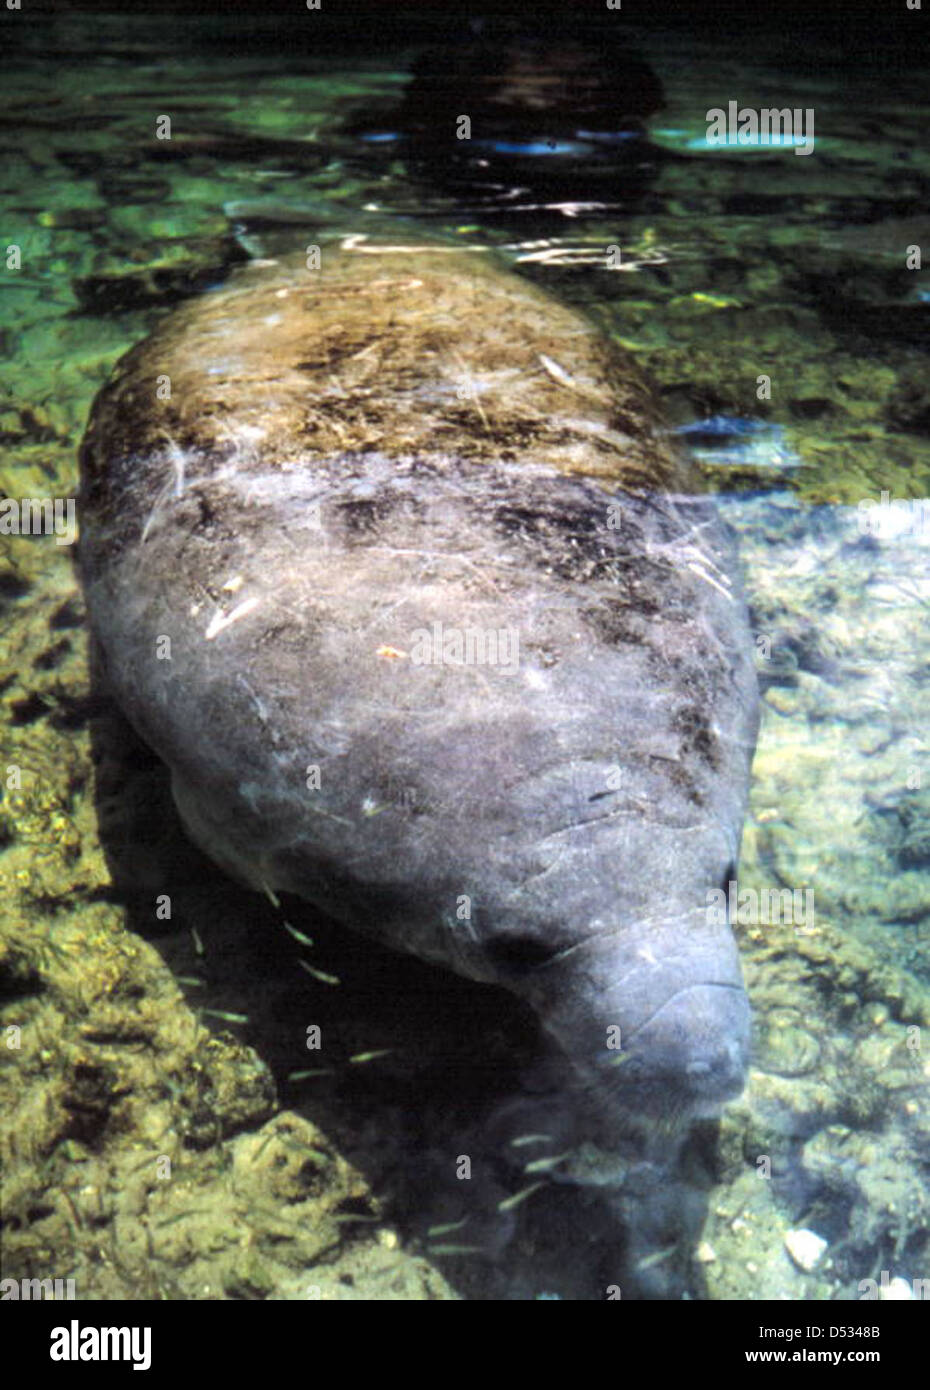 State marine mammal of Florida Stock Photo